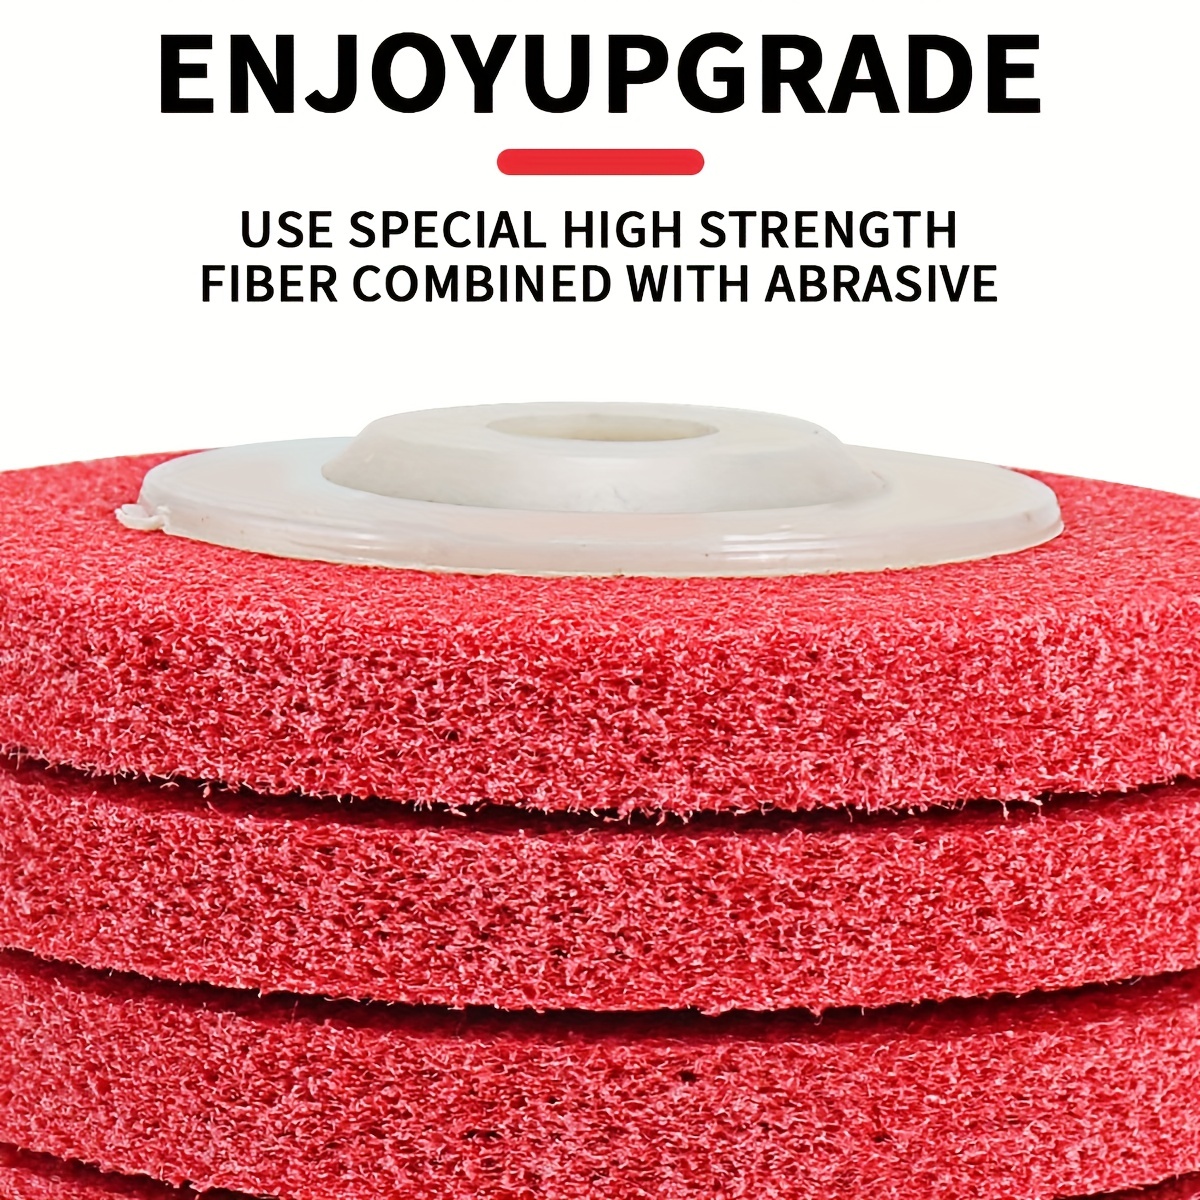 4 inch Nylon Fiber Polishing Wheel Sanding Buffing Disc Abrasive Wheels for Angle Grinders 10 Pcs